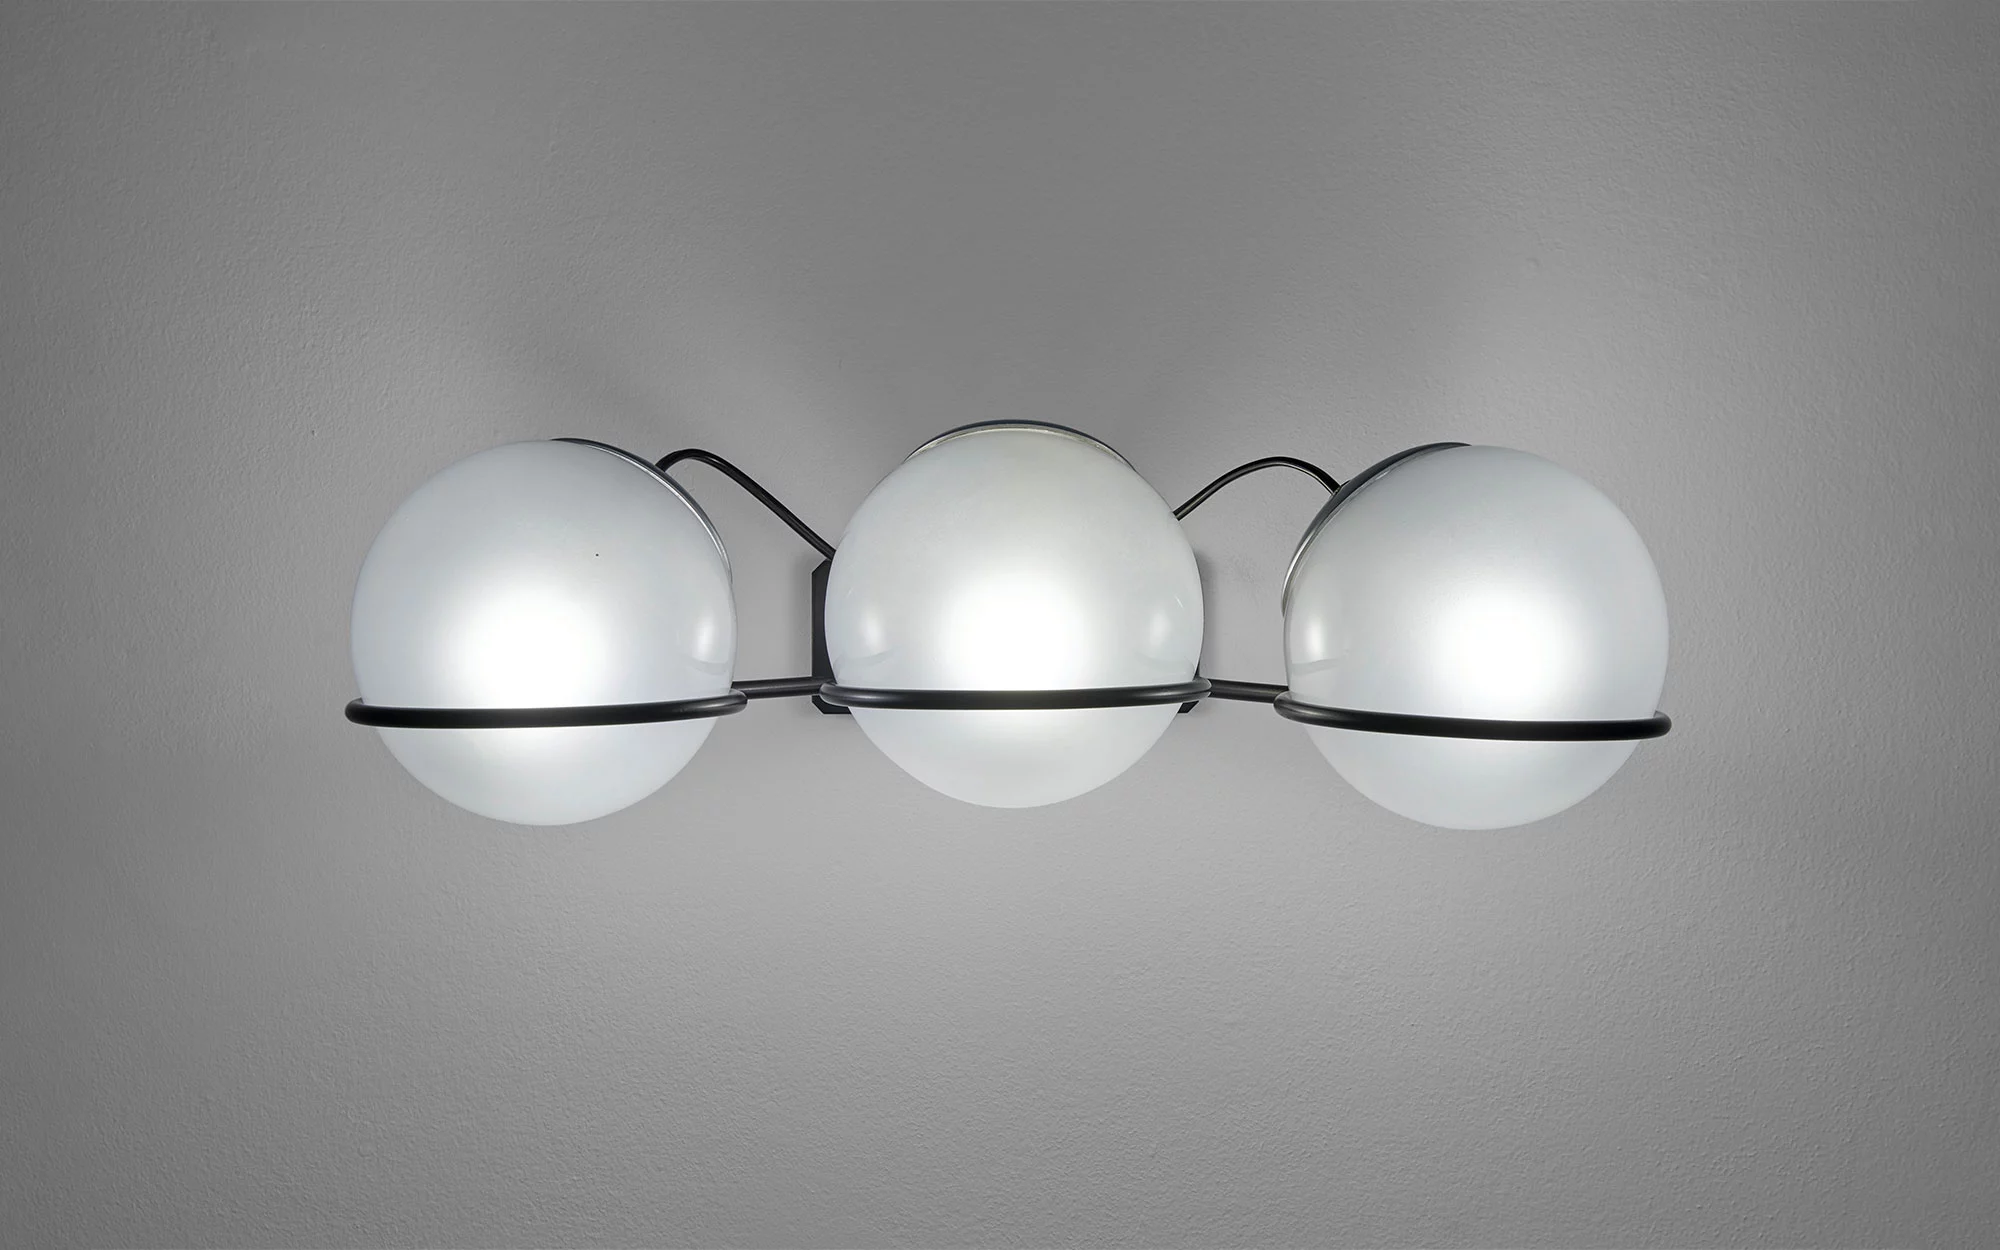 237/3 - Gino Sarfatti - Ceiling light - Galerie kreo